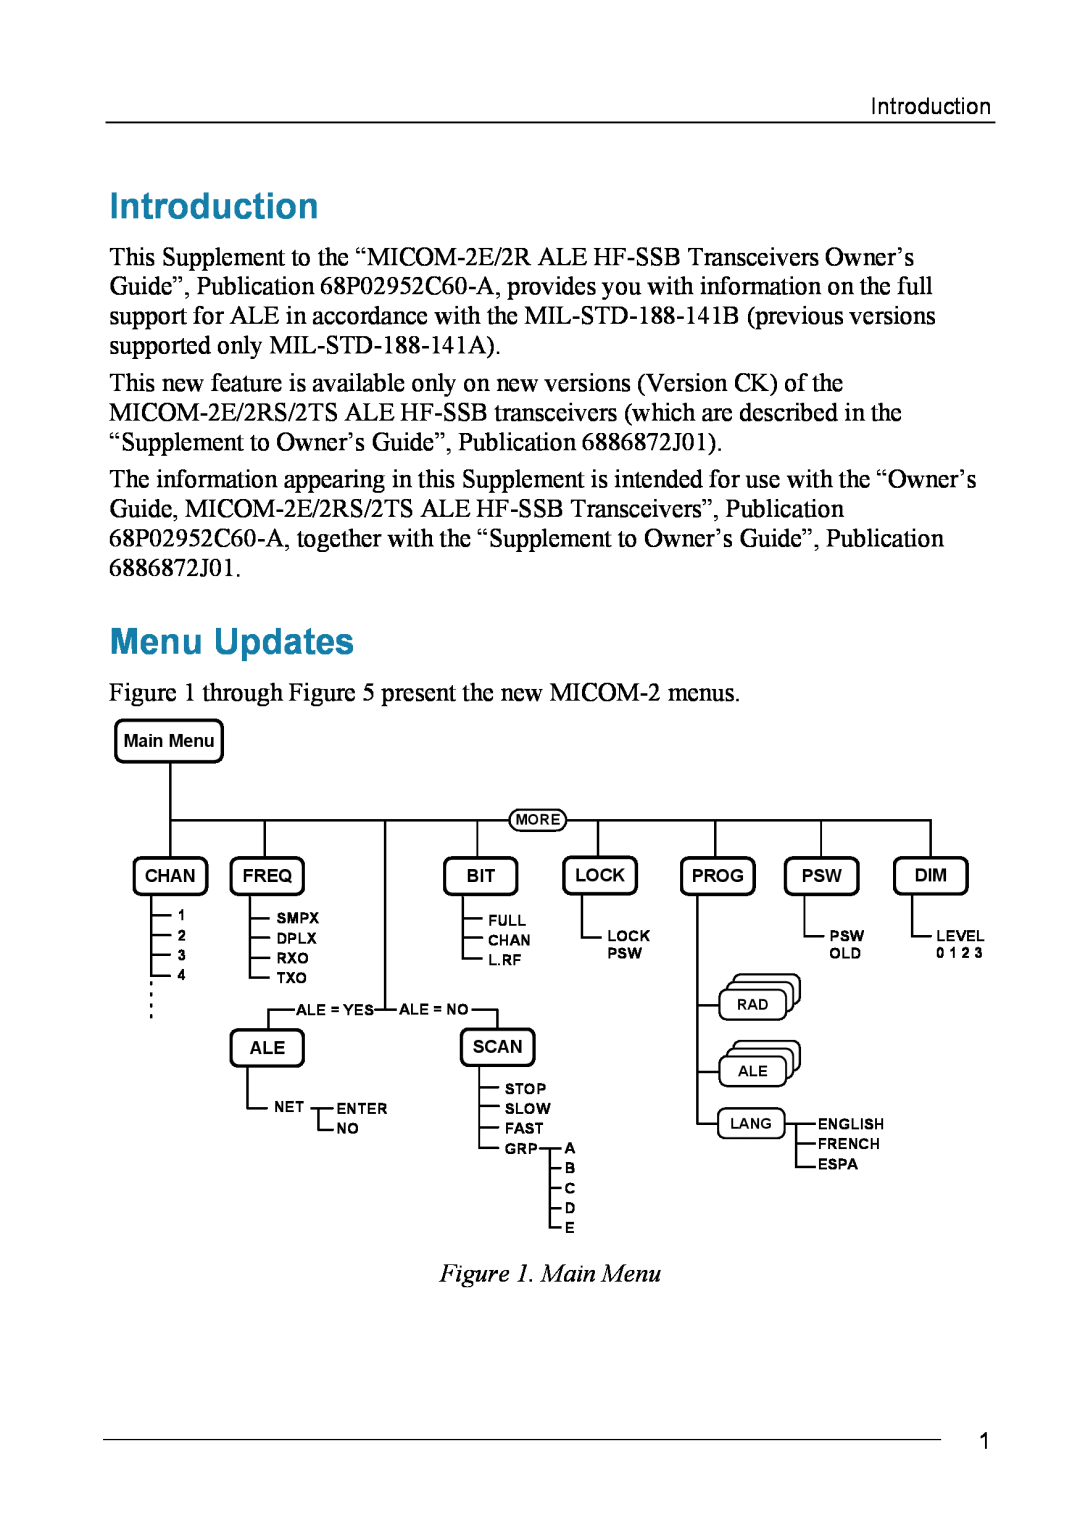 Motorola MICOM-2ES/2RS/2TS ALE manual Introduction, Menu Updates, Main Menu 